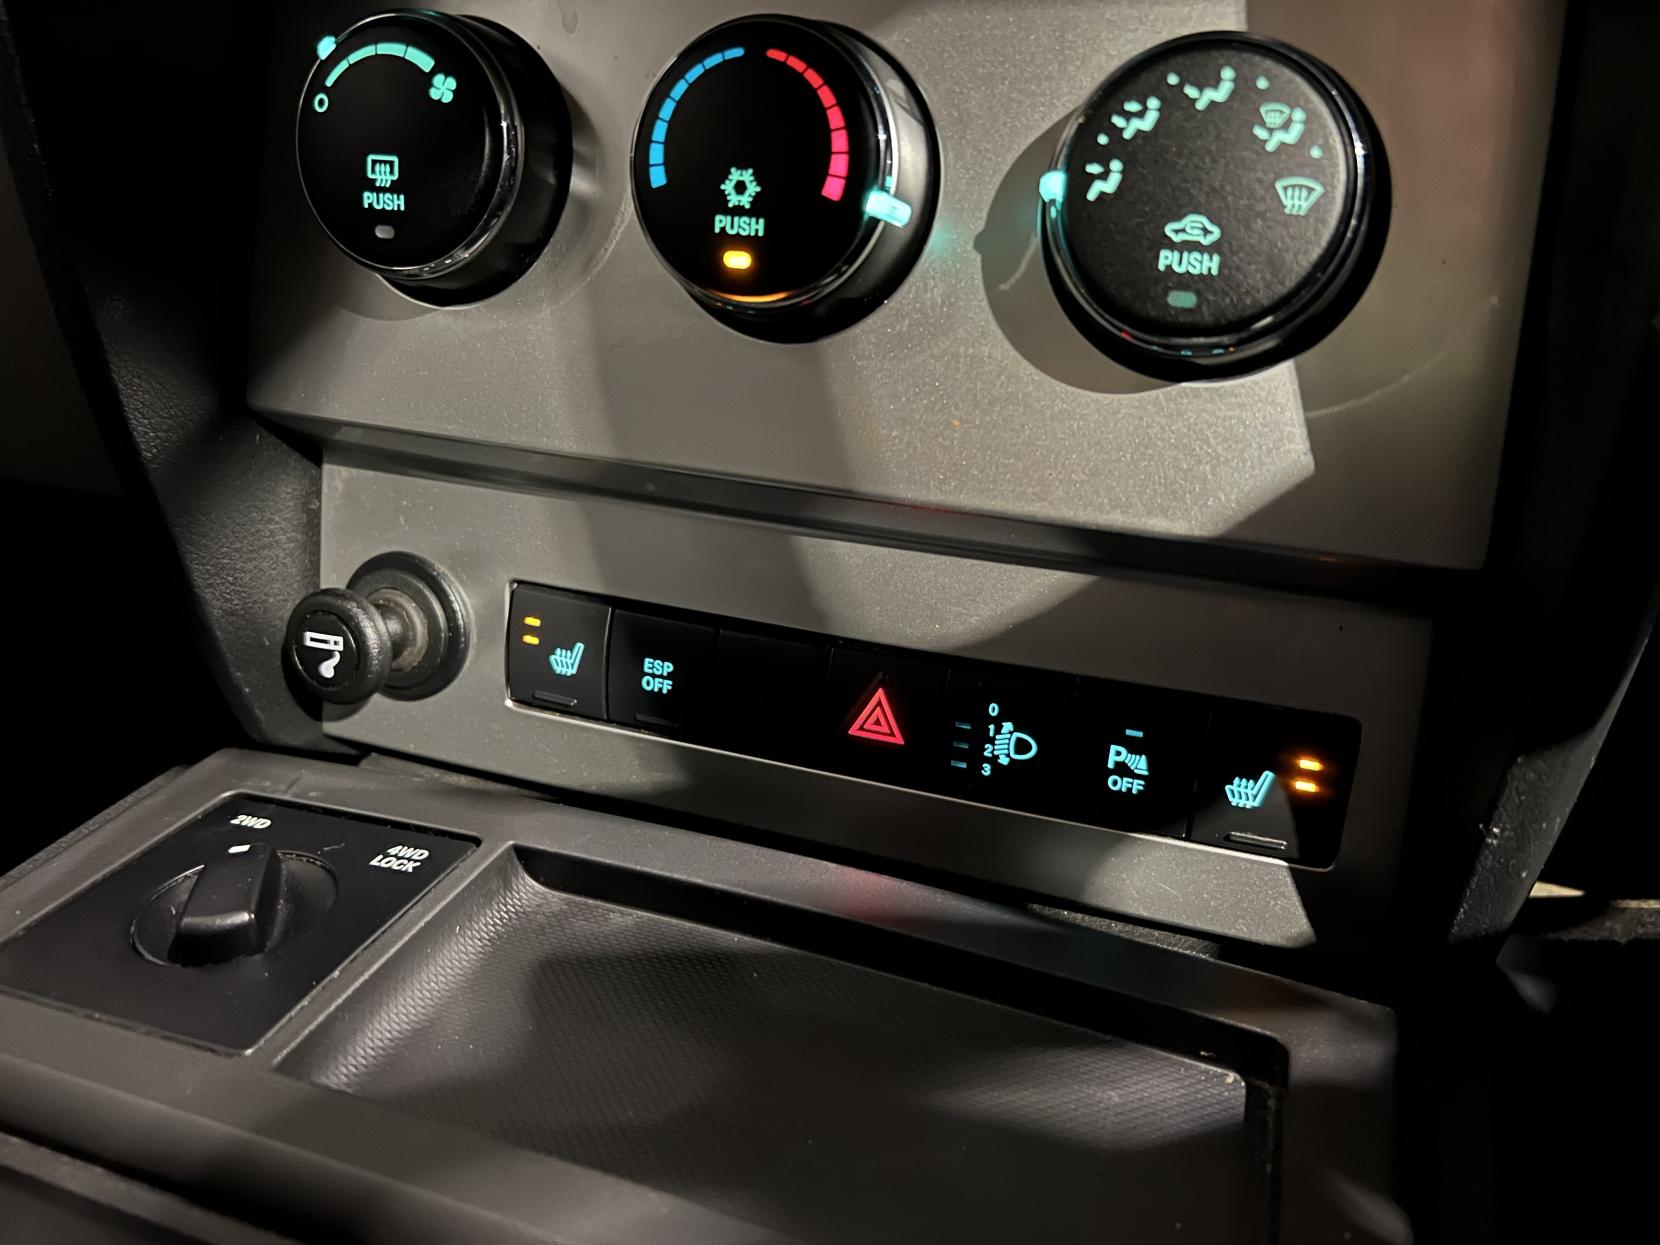 Dodge Nitro 2.8 CRD SE SUV 5dr Diesel Manual (228 g/km, 176 bhp)